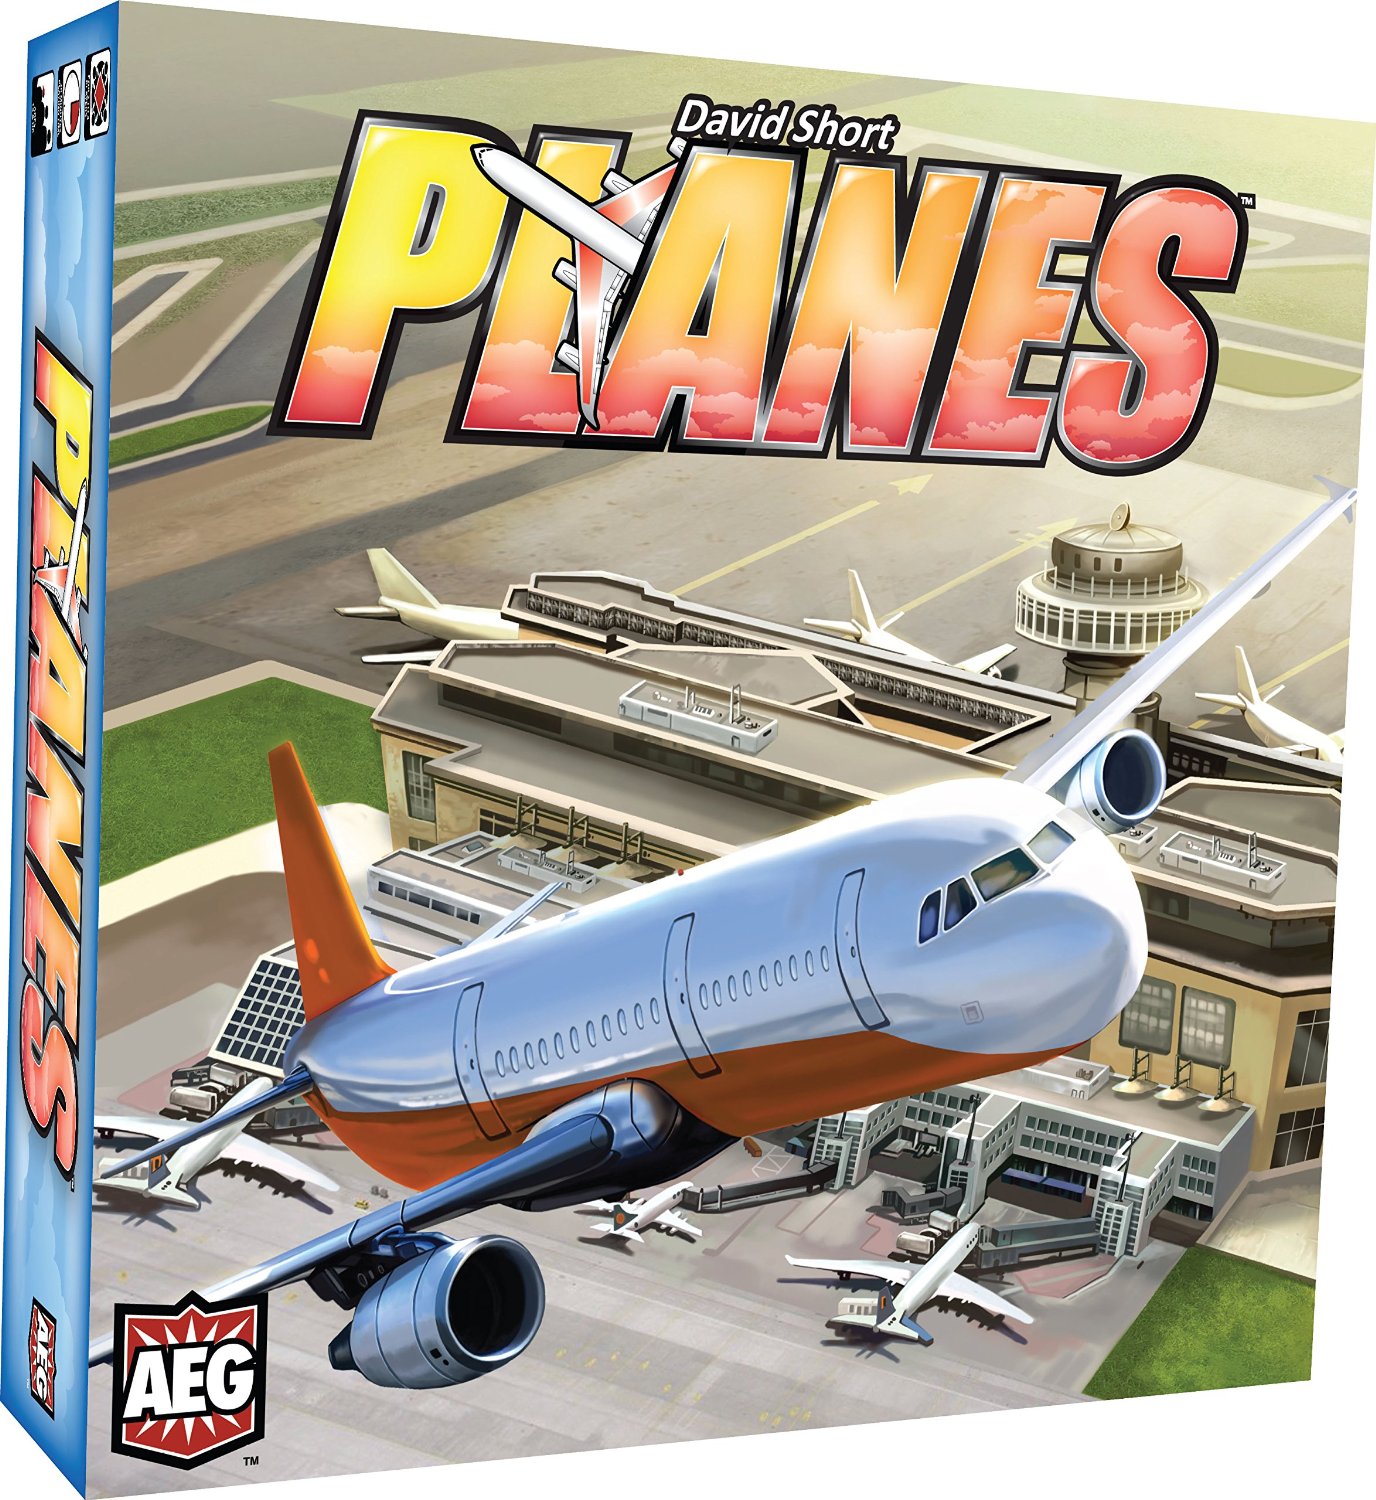 Planes Board Game